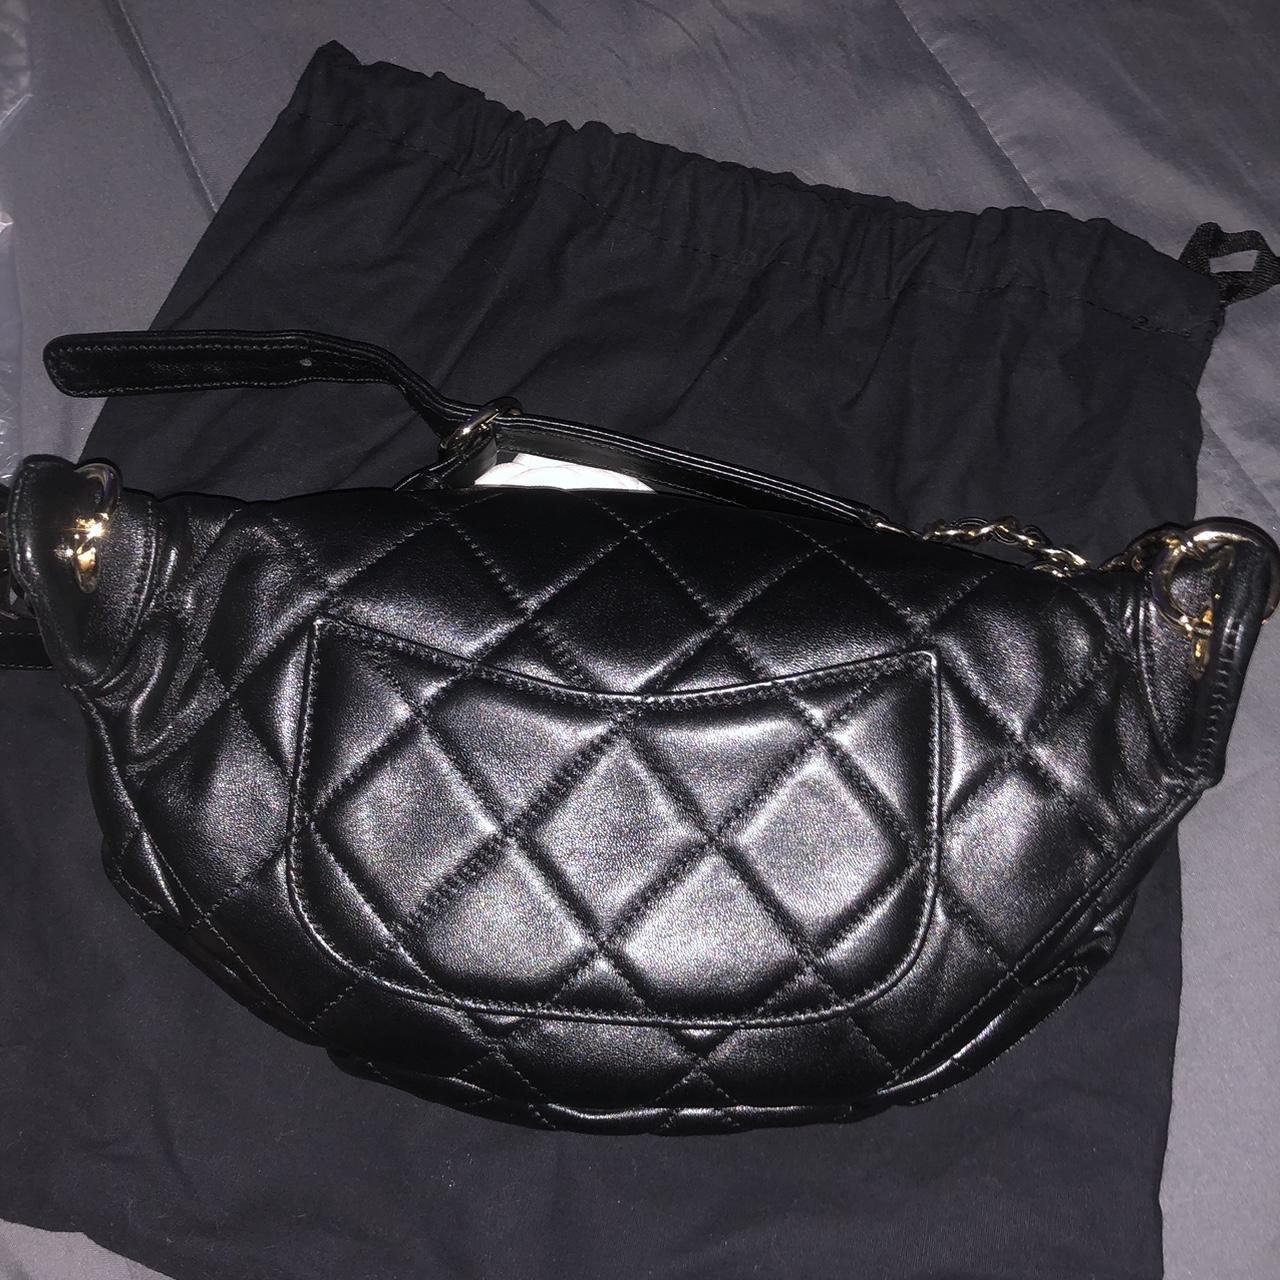 Thrifted black fanny pack #thriftedbag #fannypack - Depop